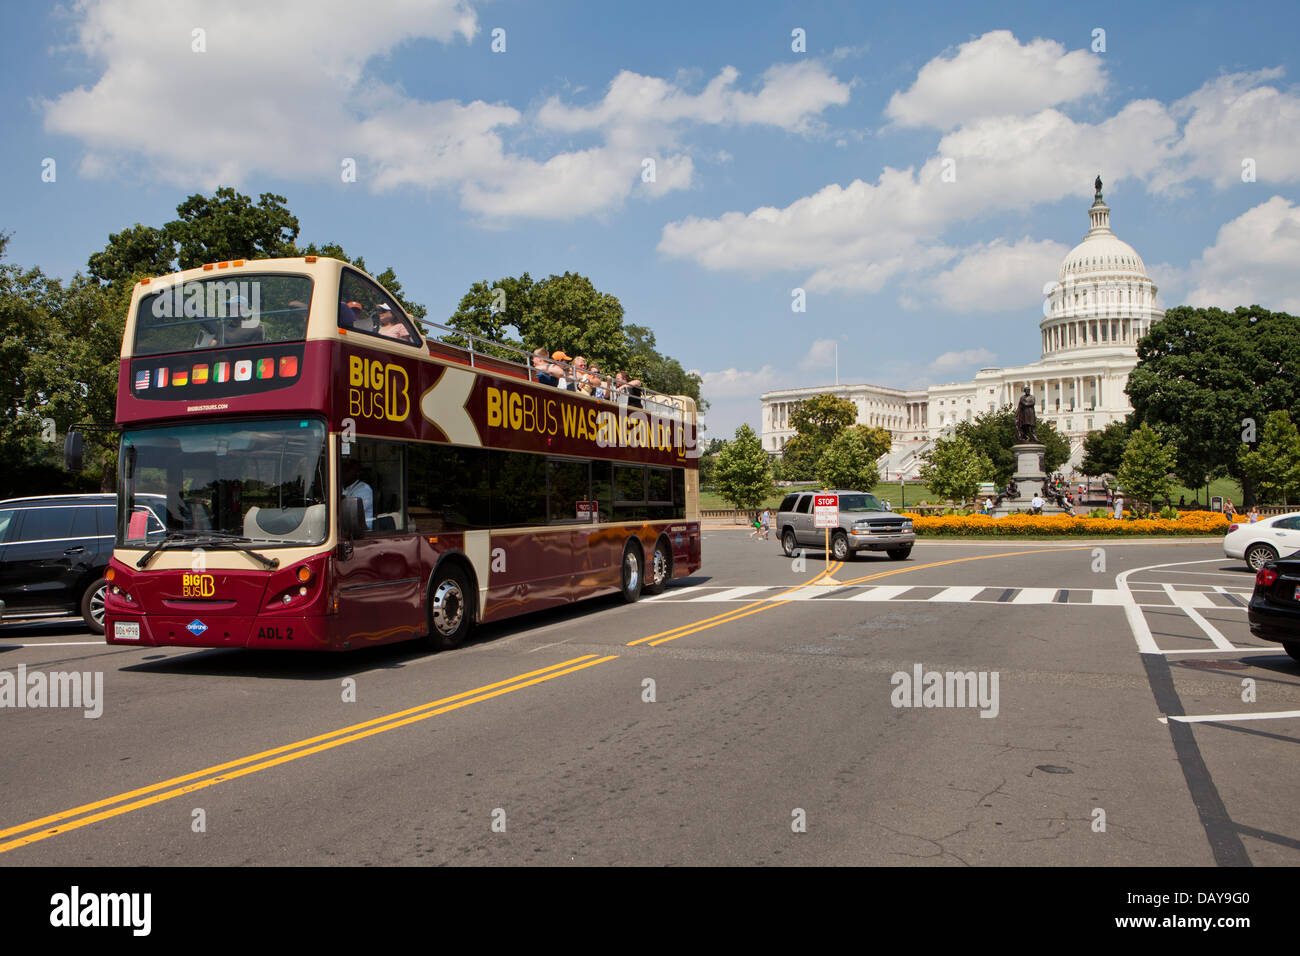 Big Bus open top tour bus  at the US Capitol building - Washington, DC USA Stock Photo